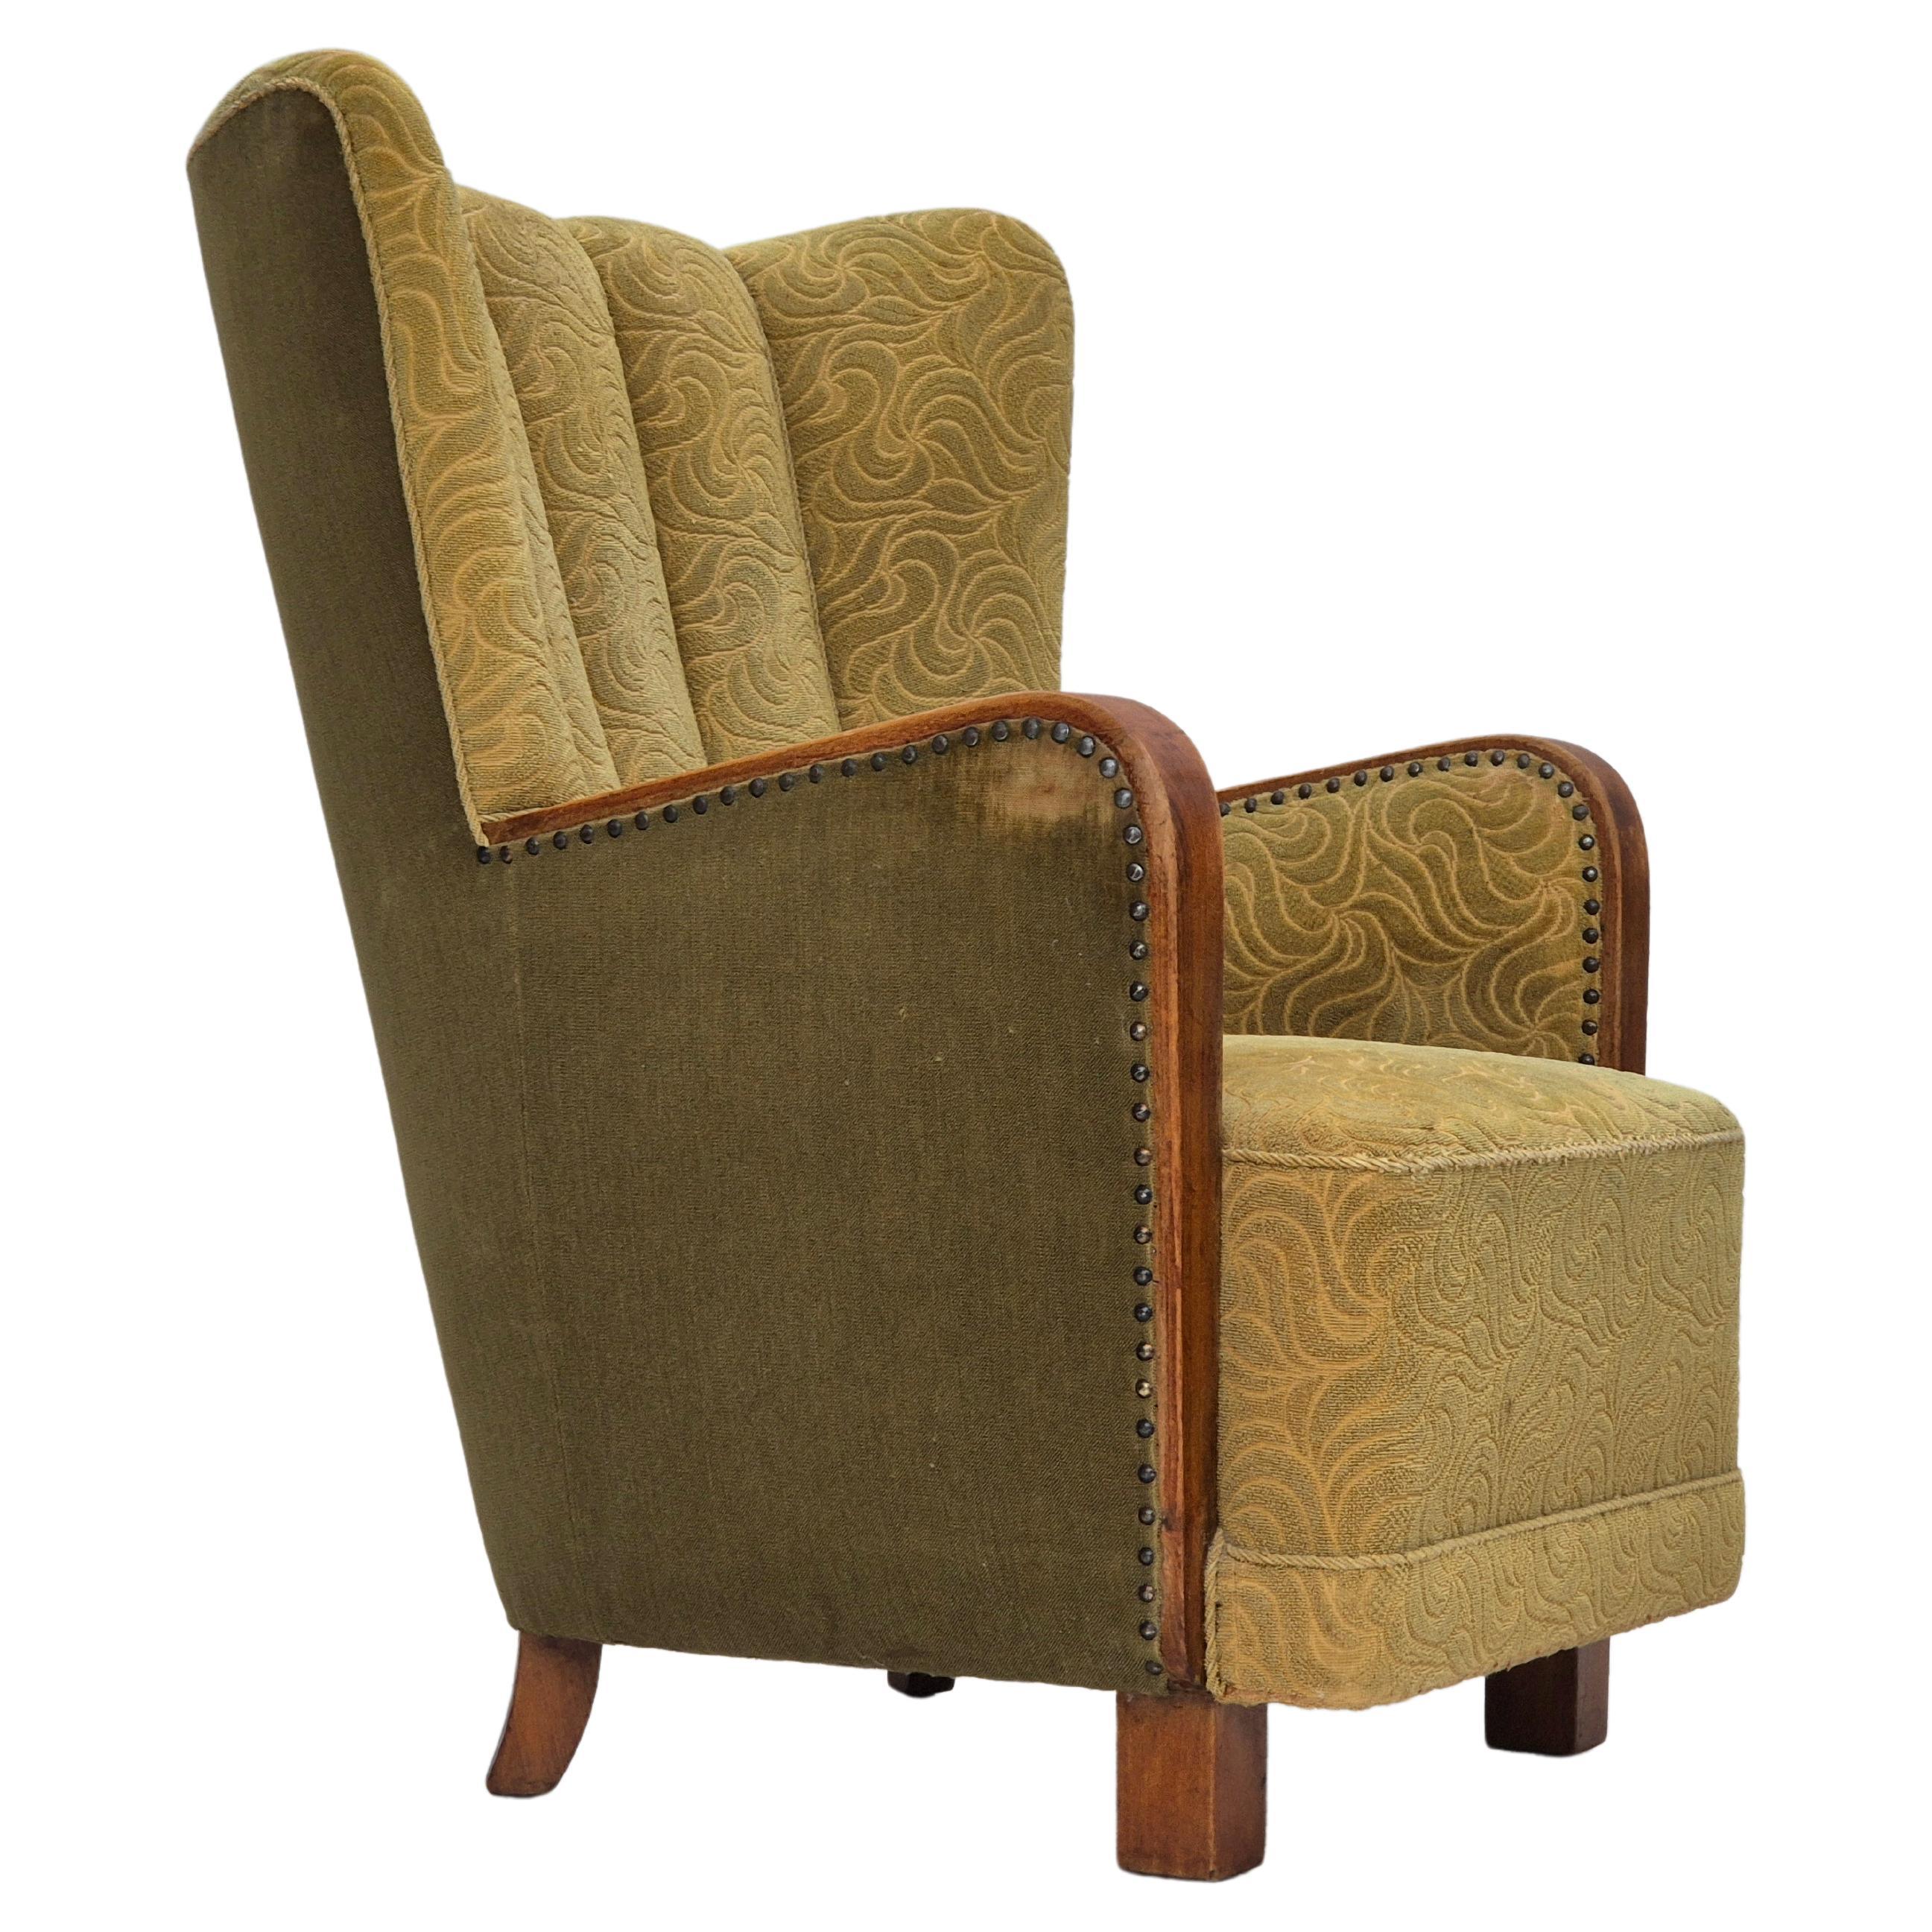 1960s, Danish highback armchair, original condition, cotton/wool.